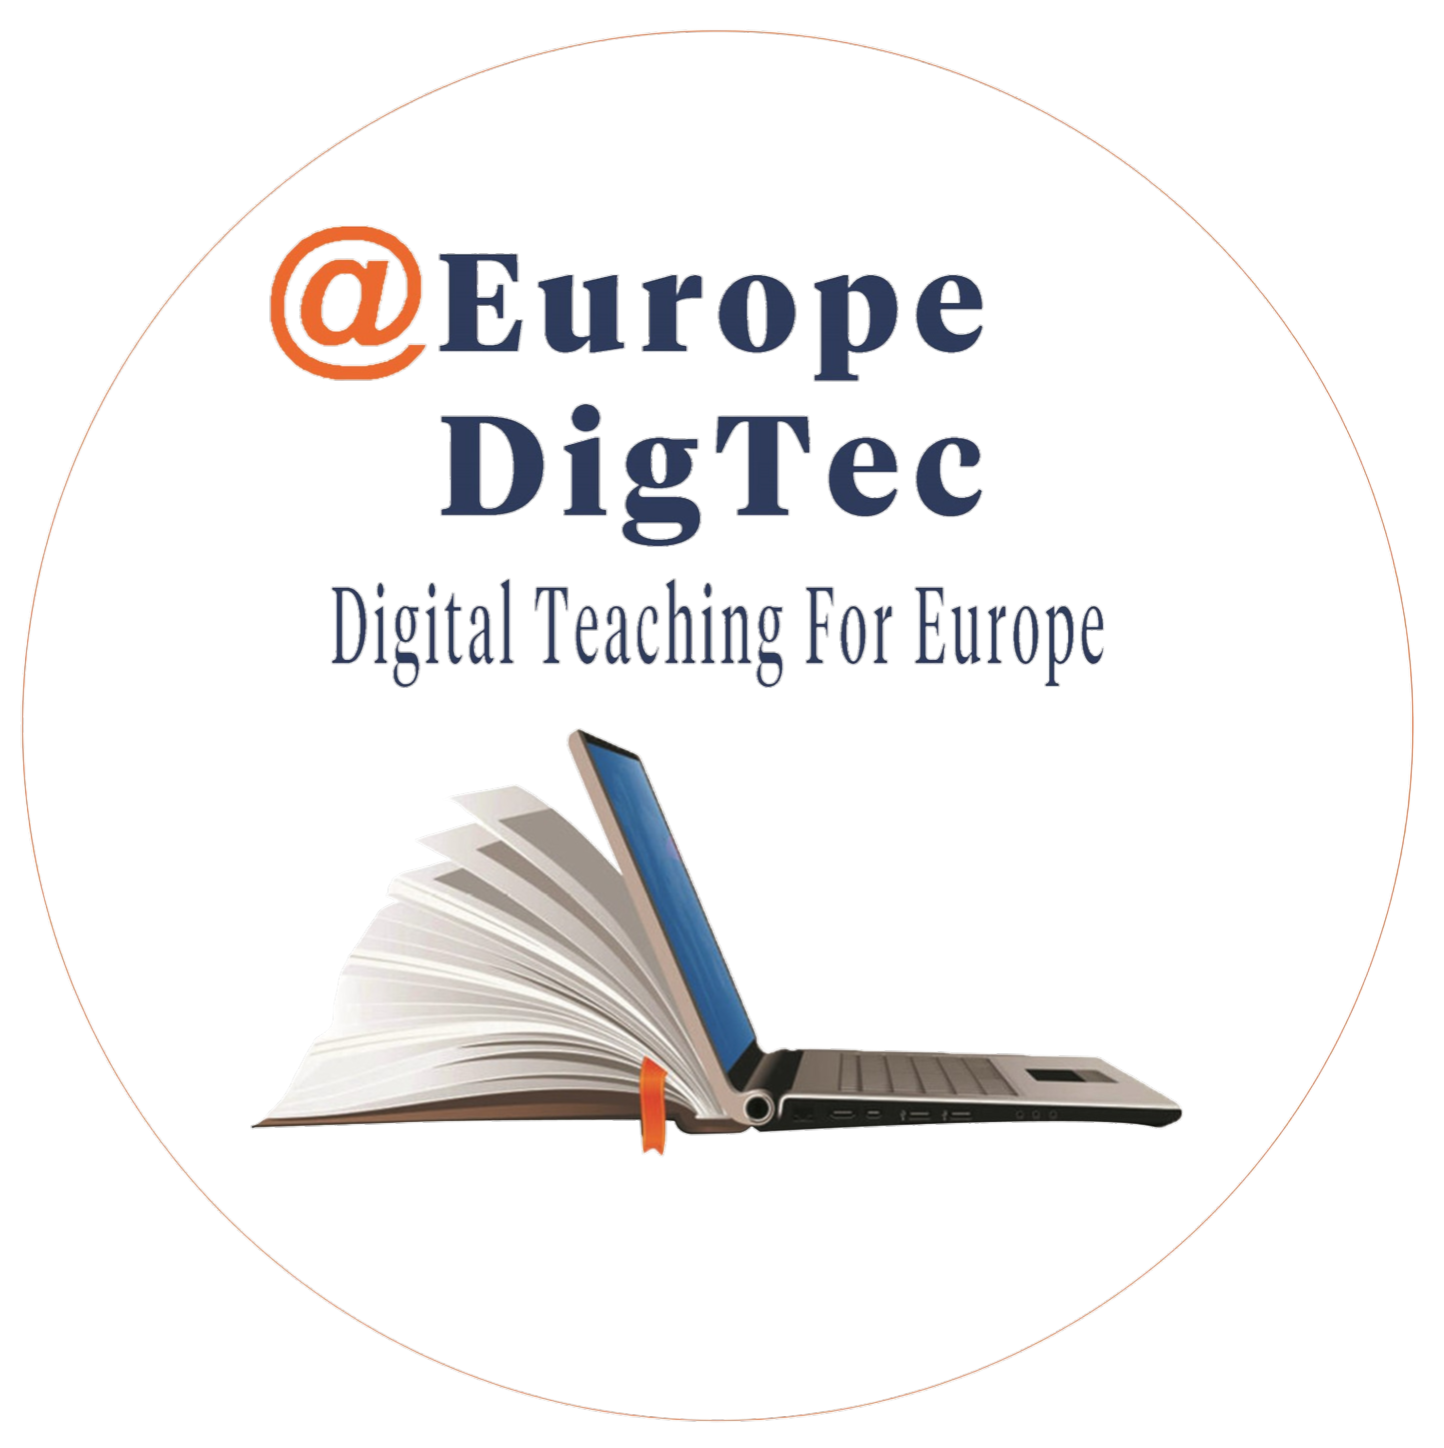 Digital Teaching For Europe